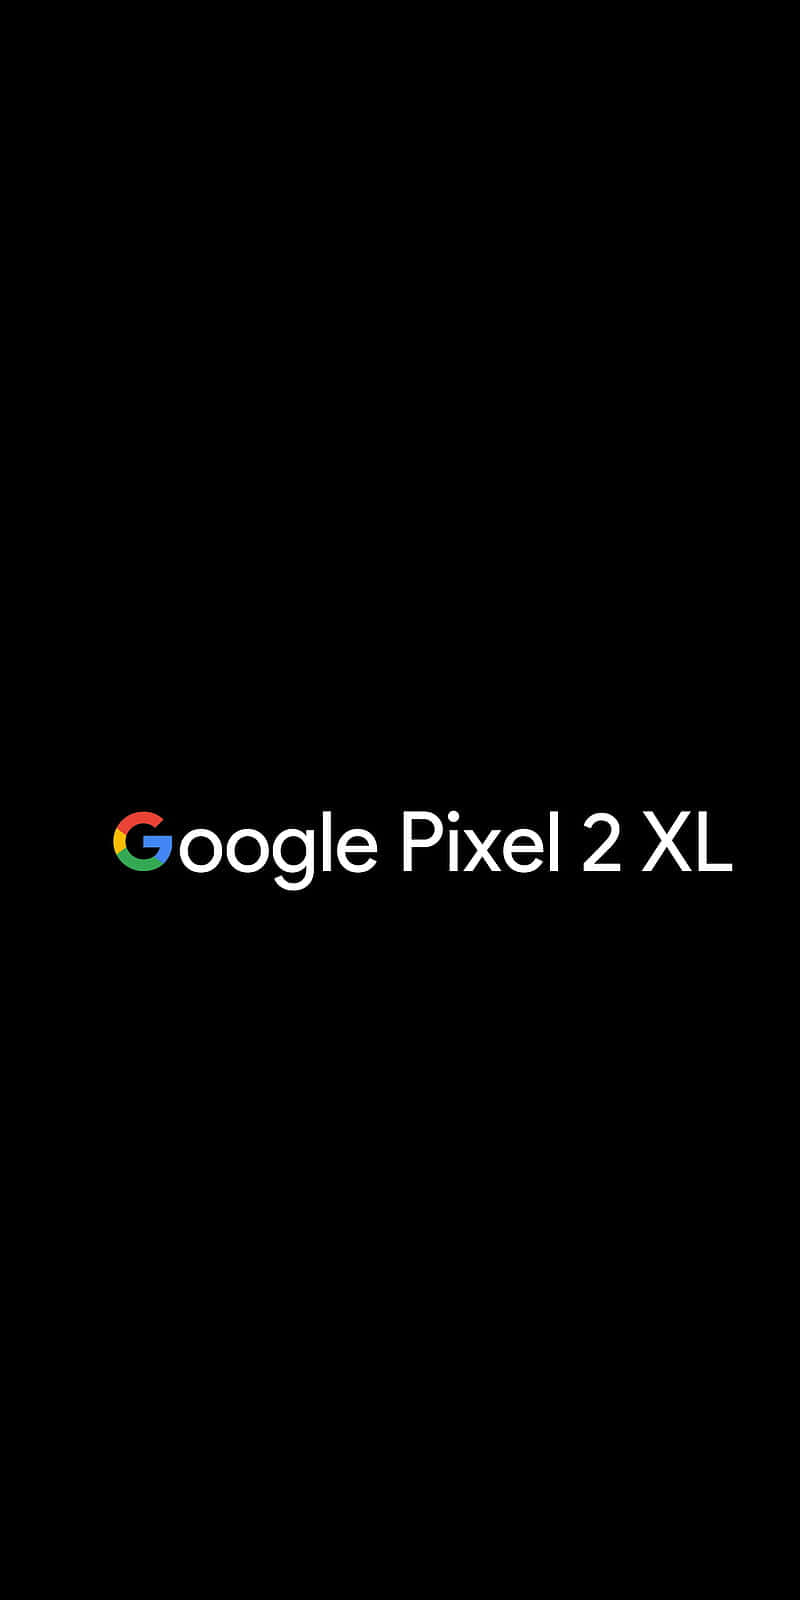 Google Pixel XL smartphone for the tech-savvy Wallpaper